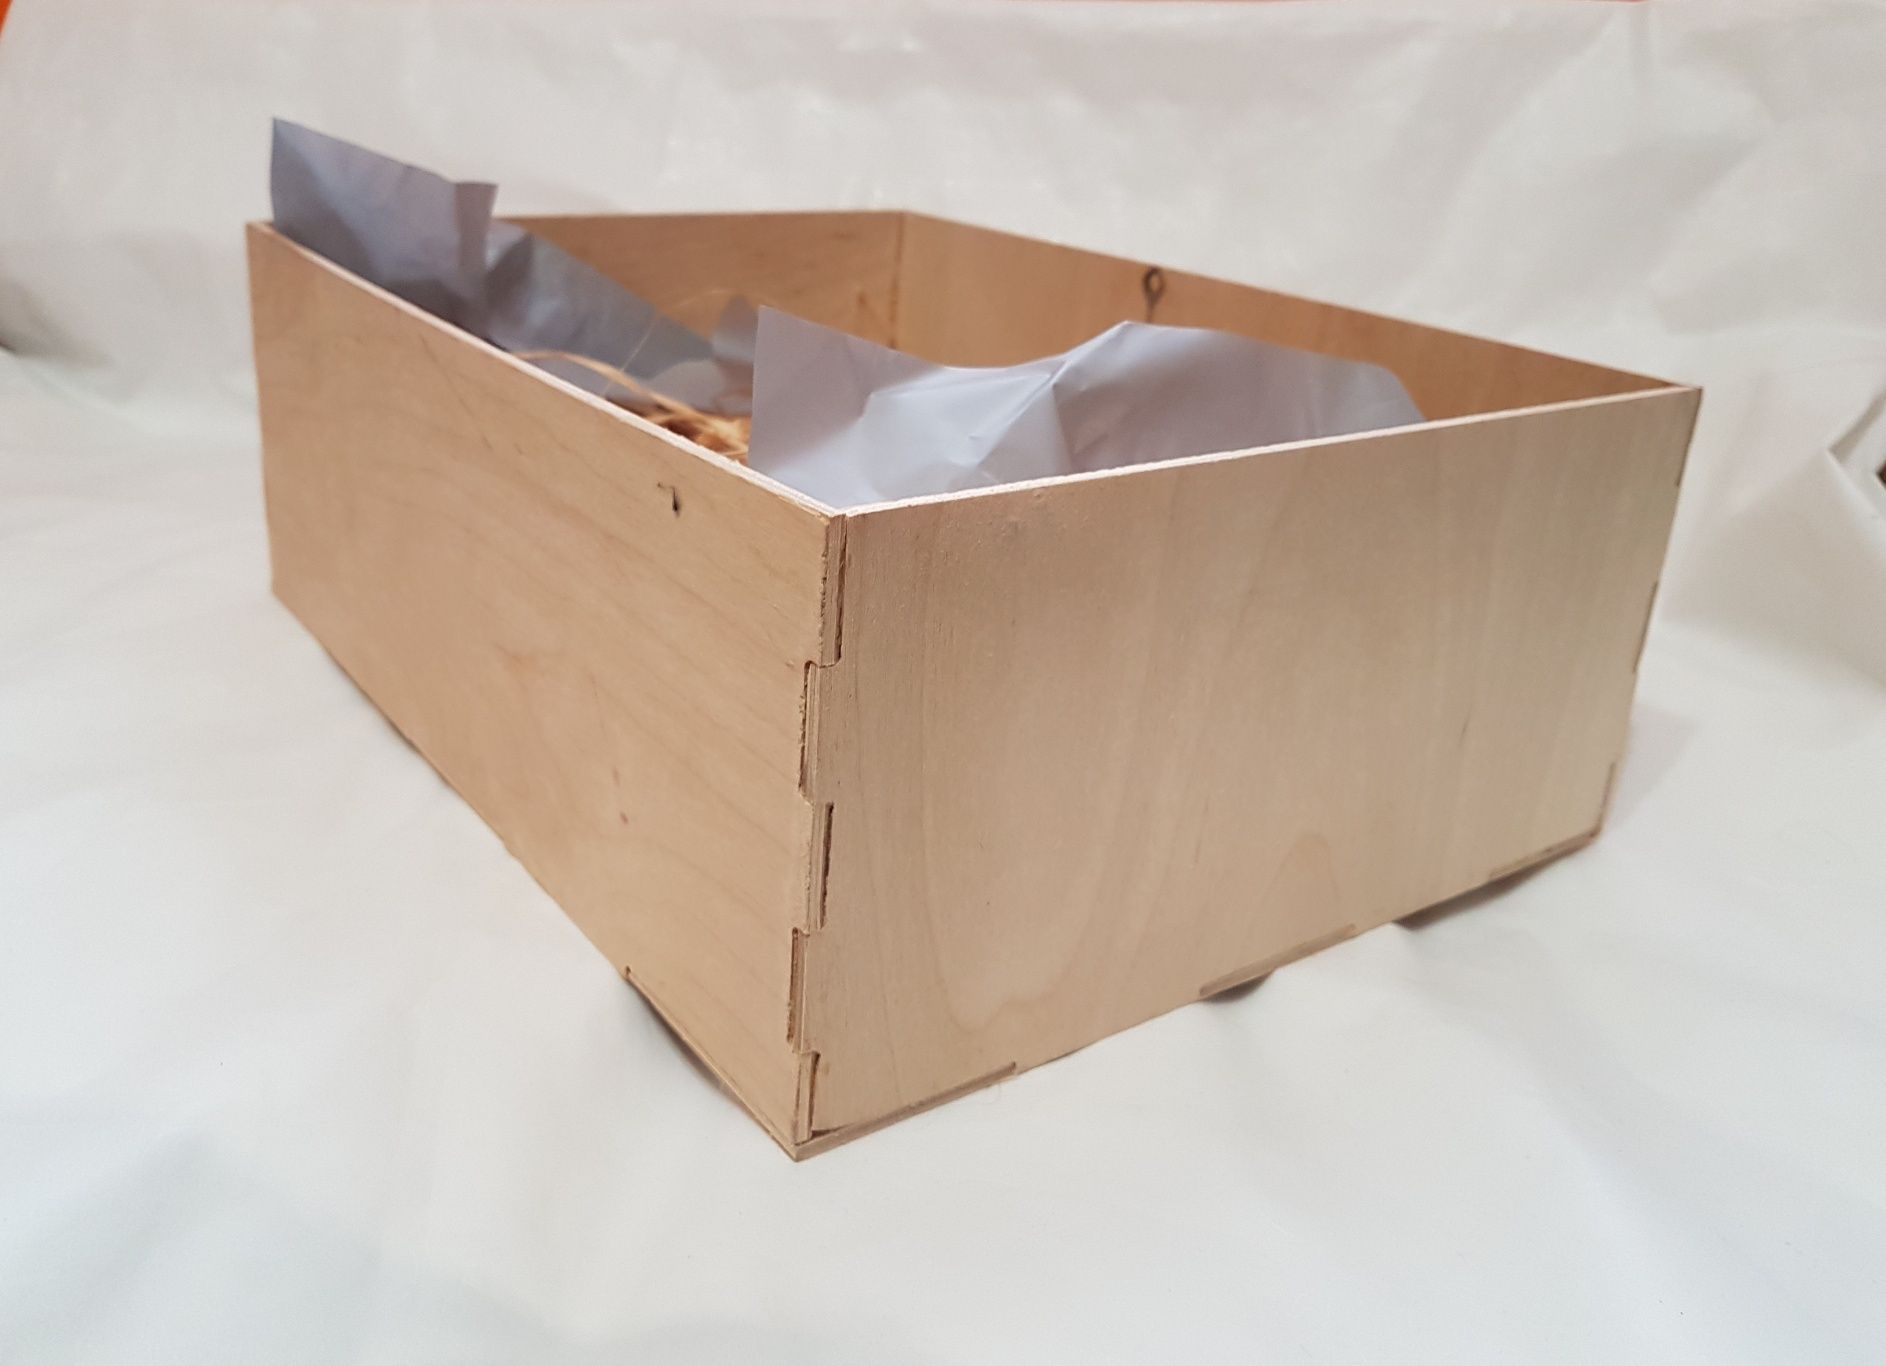 Деревянная коробка для подарка без крышки